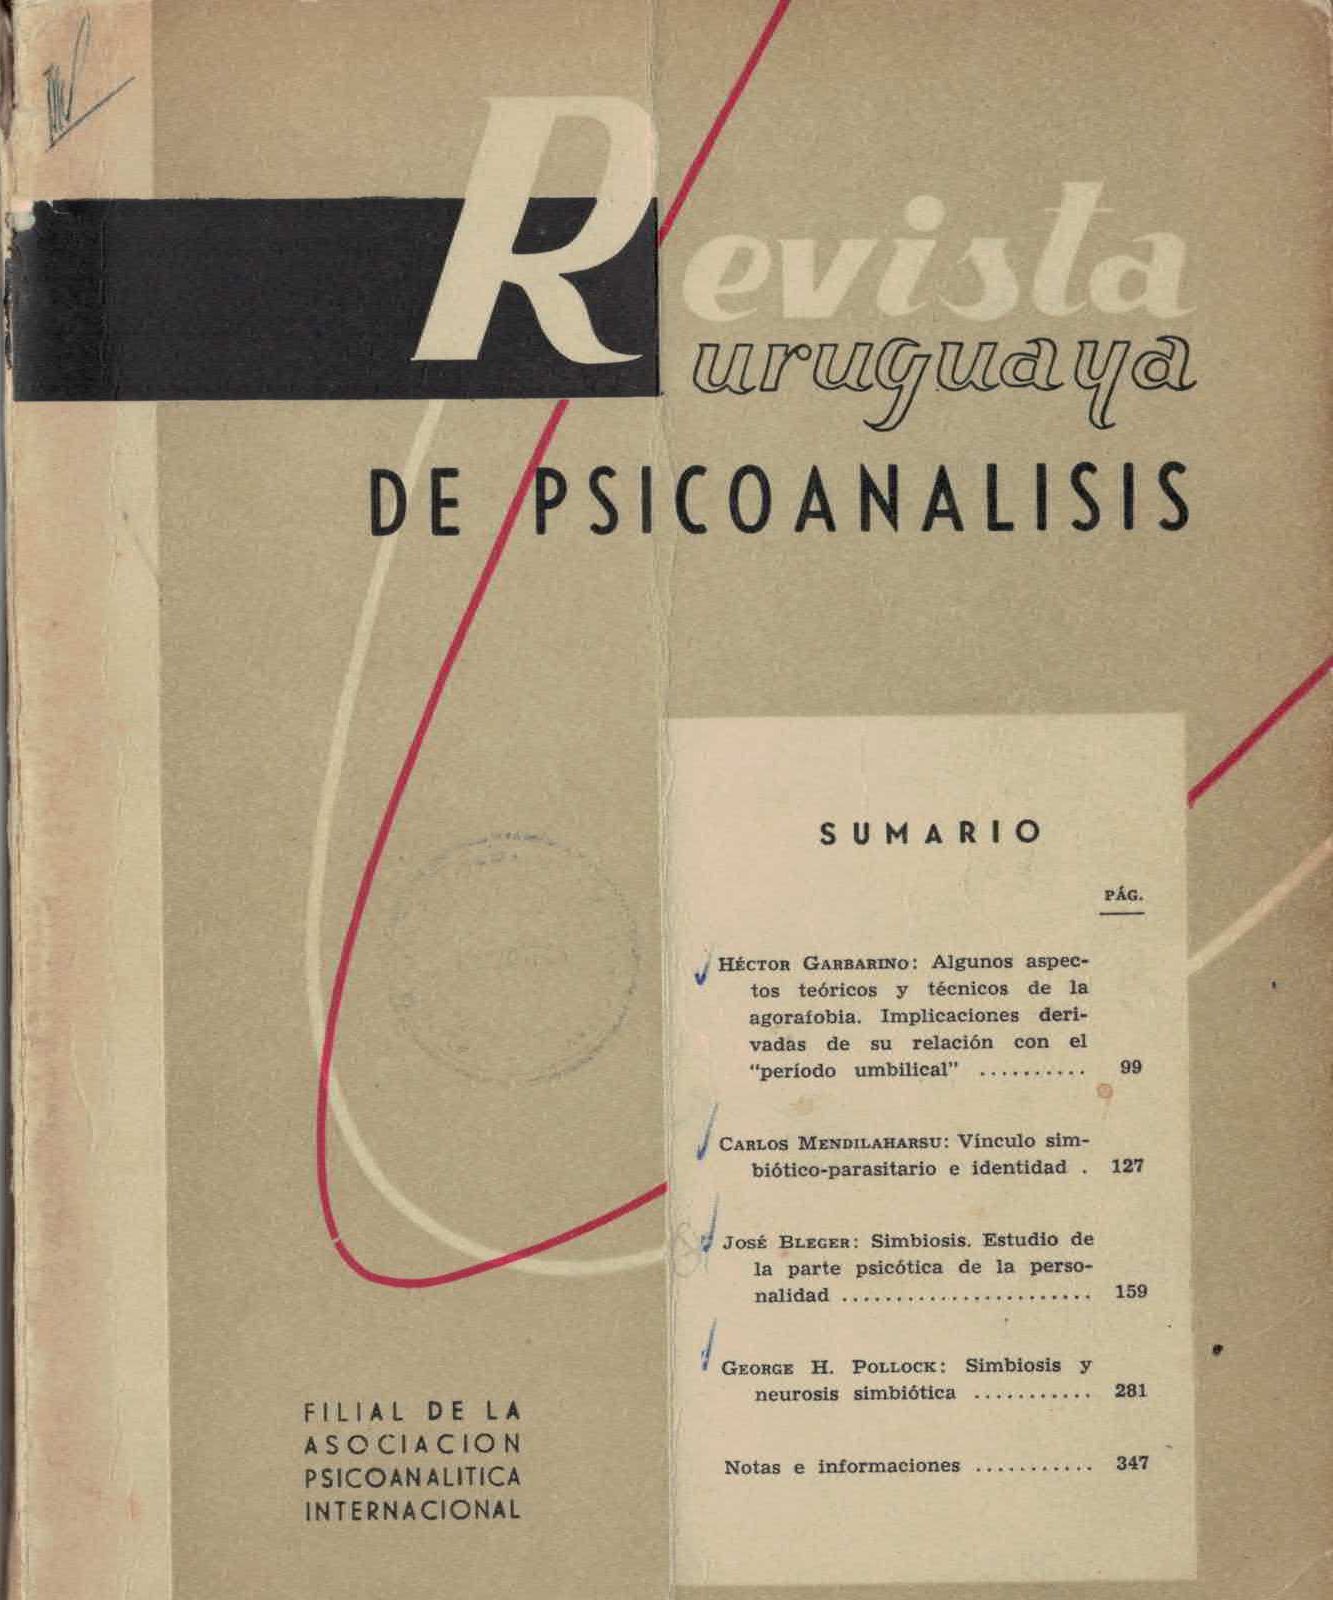 					Ver Vol. 6 Núm. 2-3 (1964): Revista Uruguaya de Psicoanálisis
				